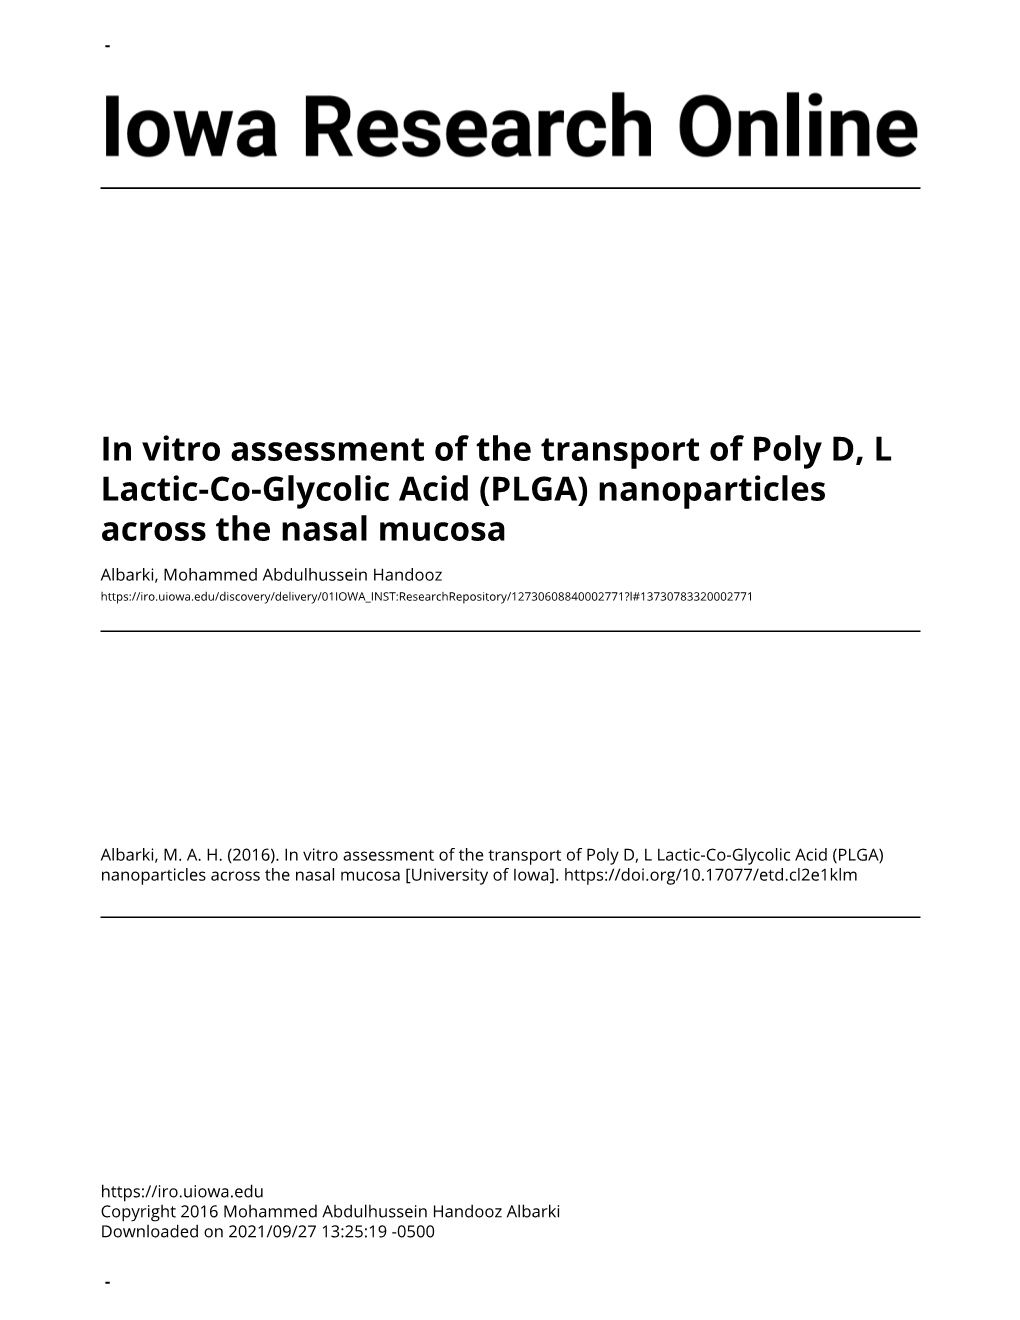 PLGA) Nanoparticles Across the Nasal Mucosa